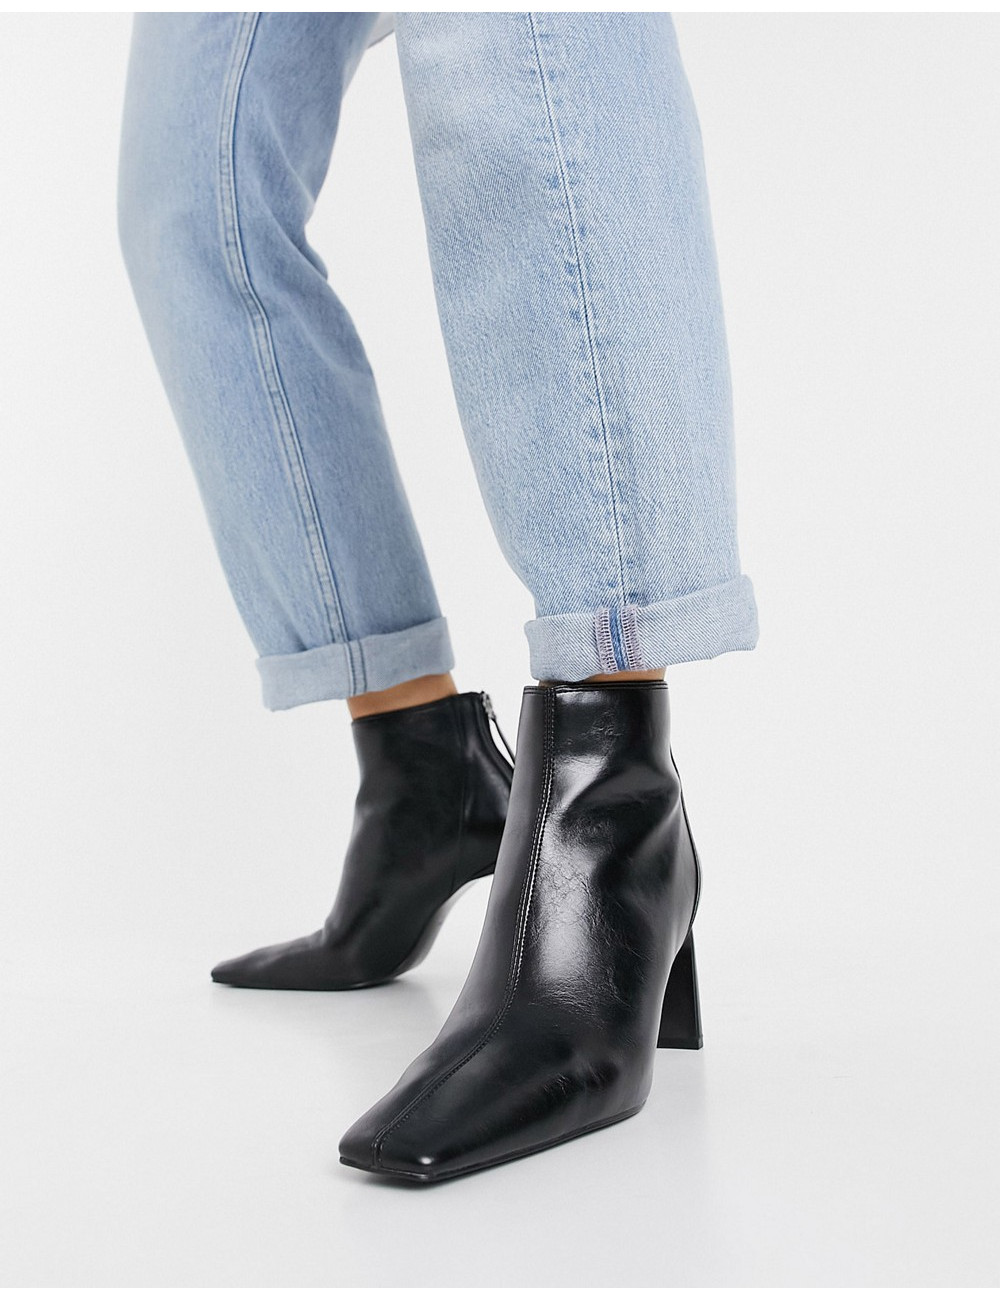 Mango heeled boots in black